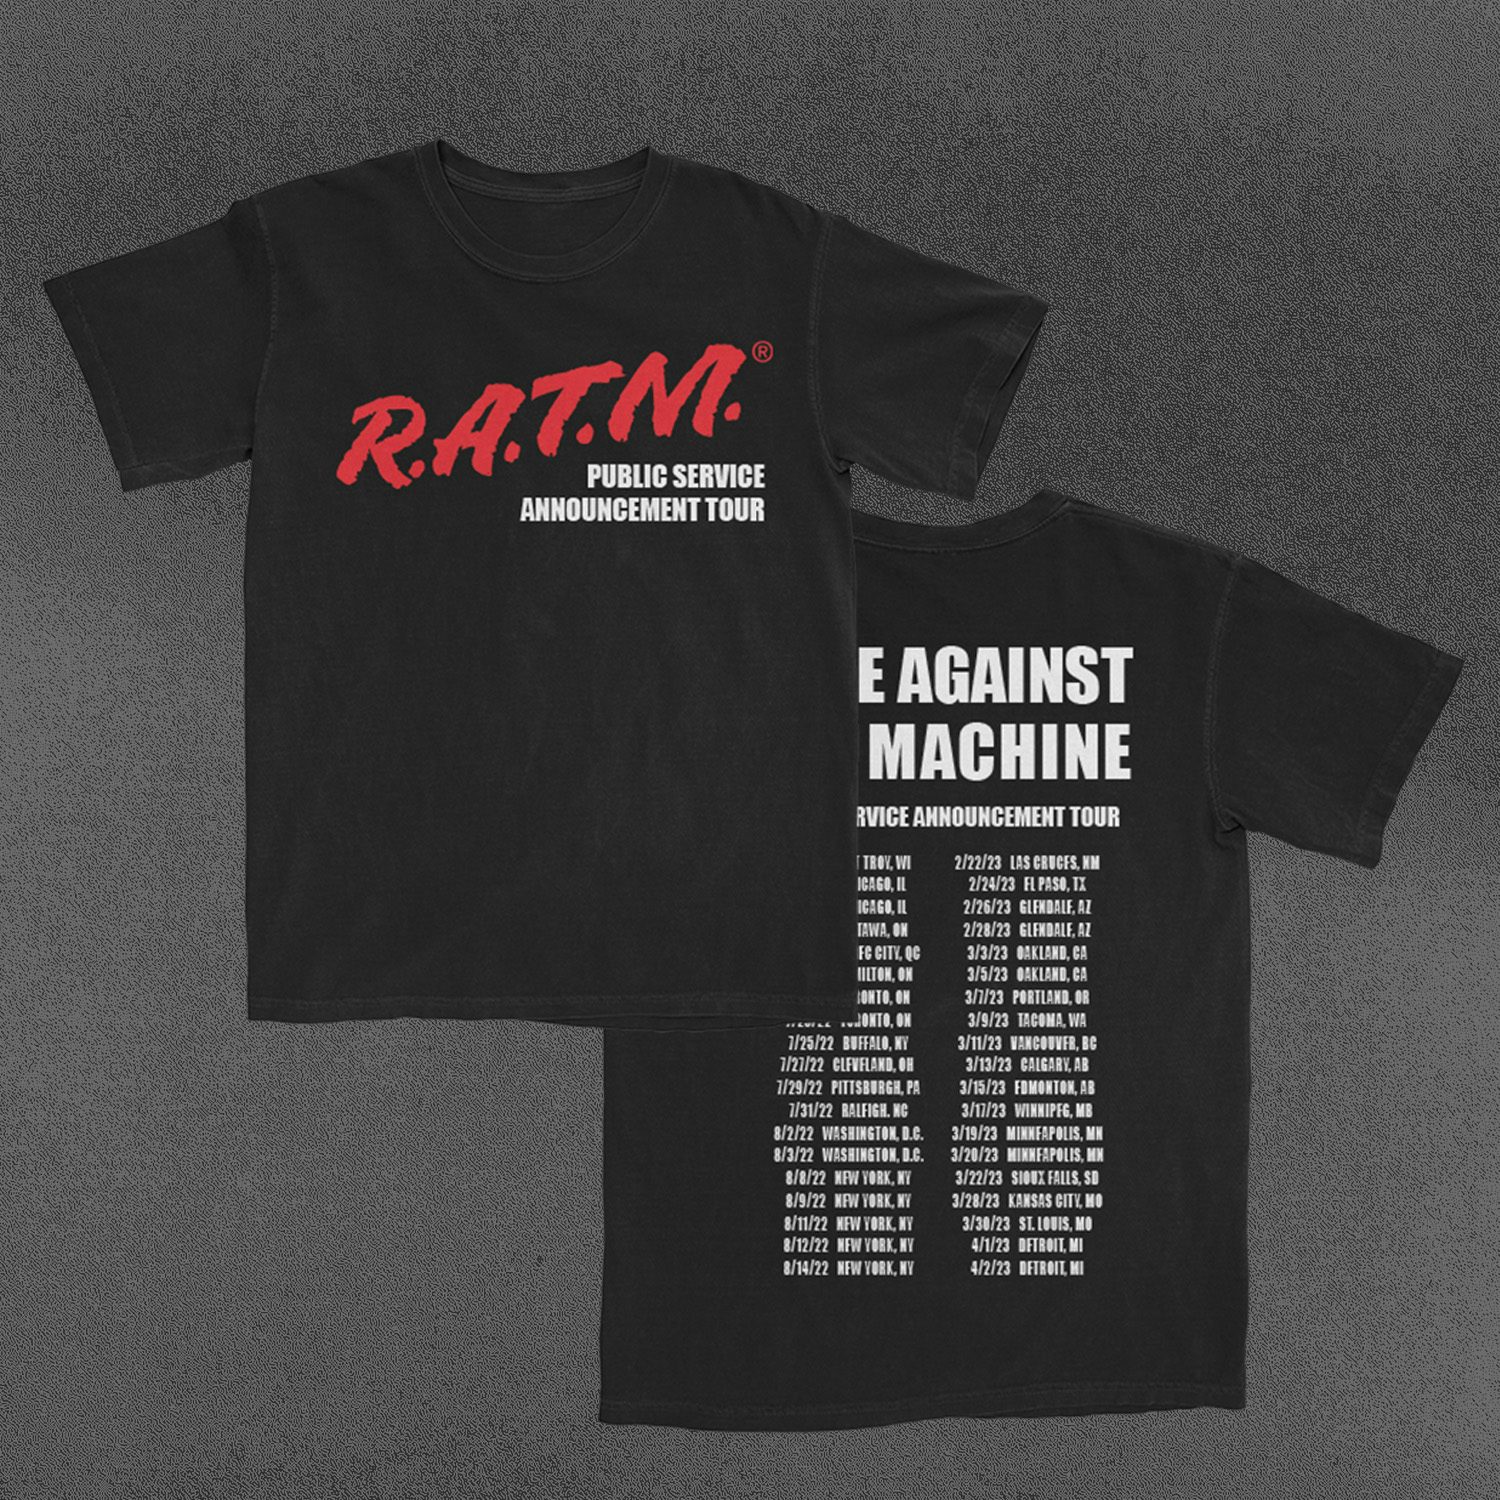 Rage against the machine tシャツ